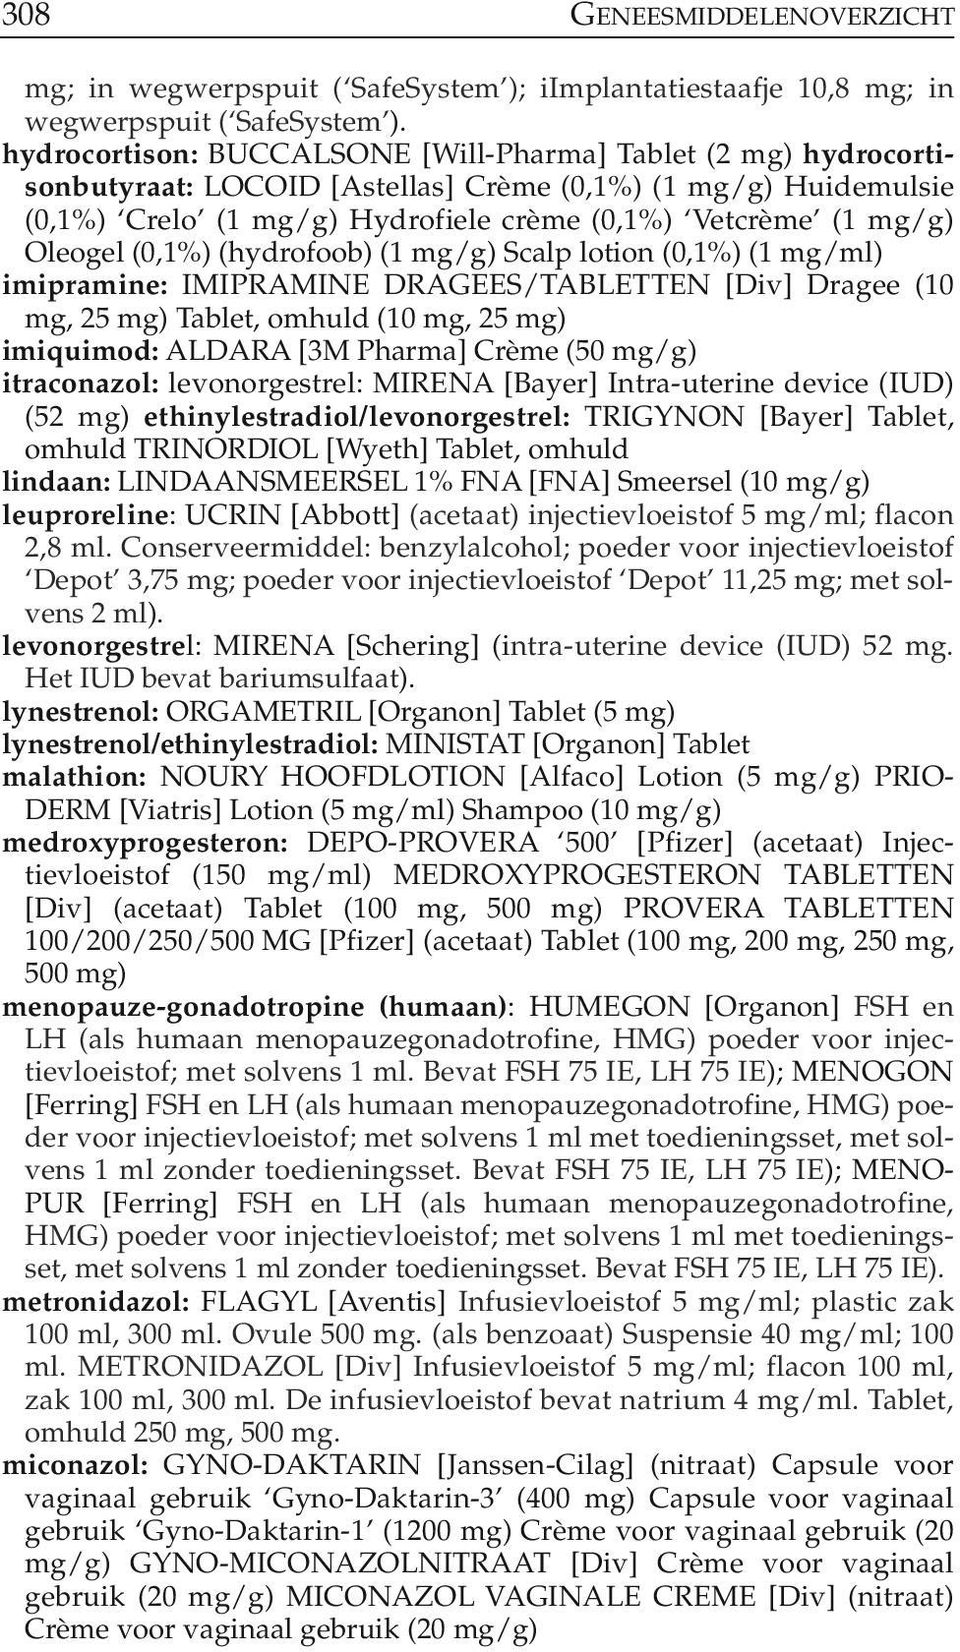 Oleogel (0,1%) (hydrofoob) (1 mg/g) Scalp lotion (0,1%) (1 mg/ml) imipramine: IMIPRAMINE DRAGEES/TABLETTEN [Div] Dragee (10 mg, 25 mg) Tablet, omhuld (10 mg, 25 mg) imiquimod: ALDARA [3M Pharma]